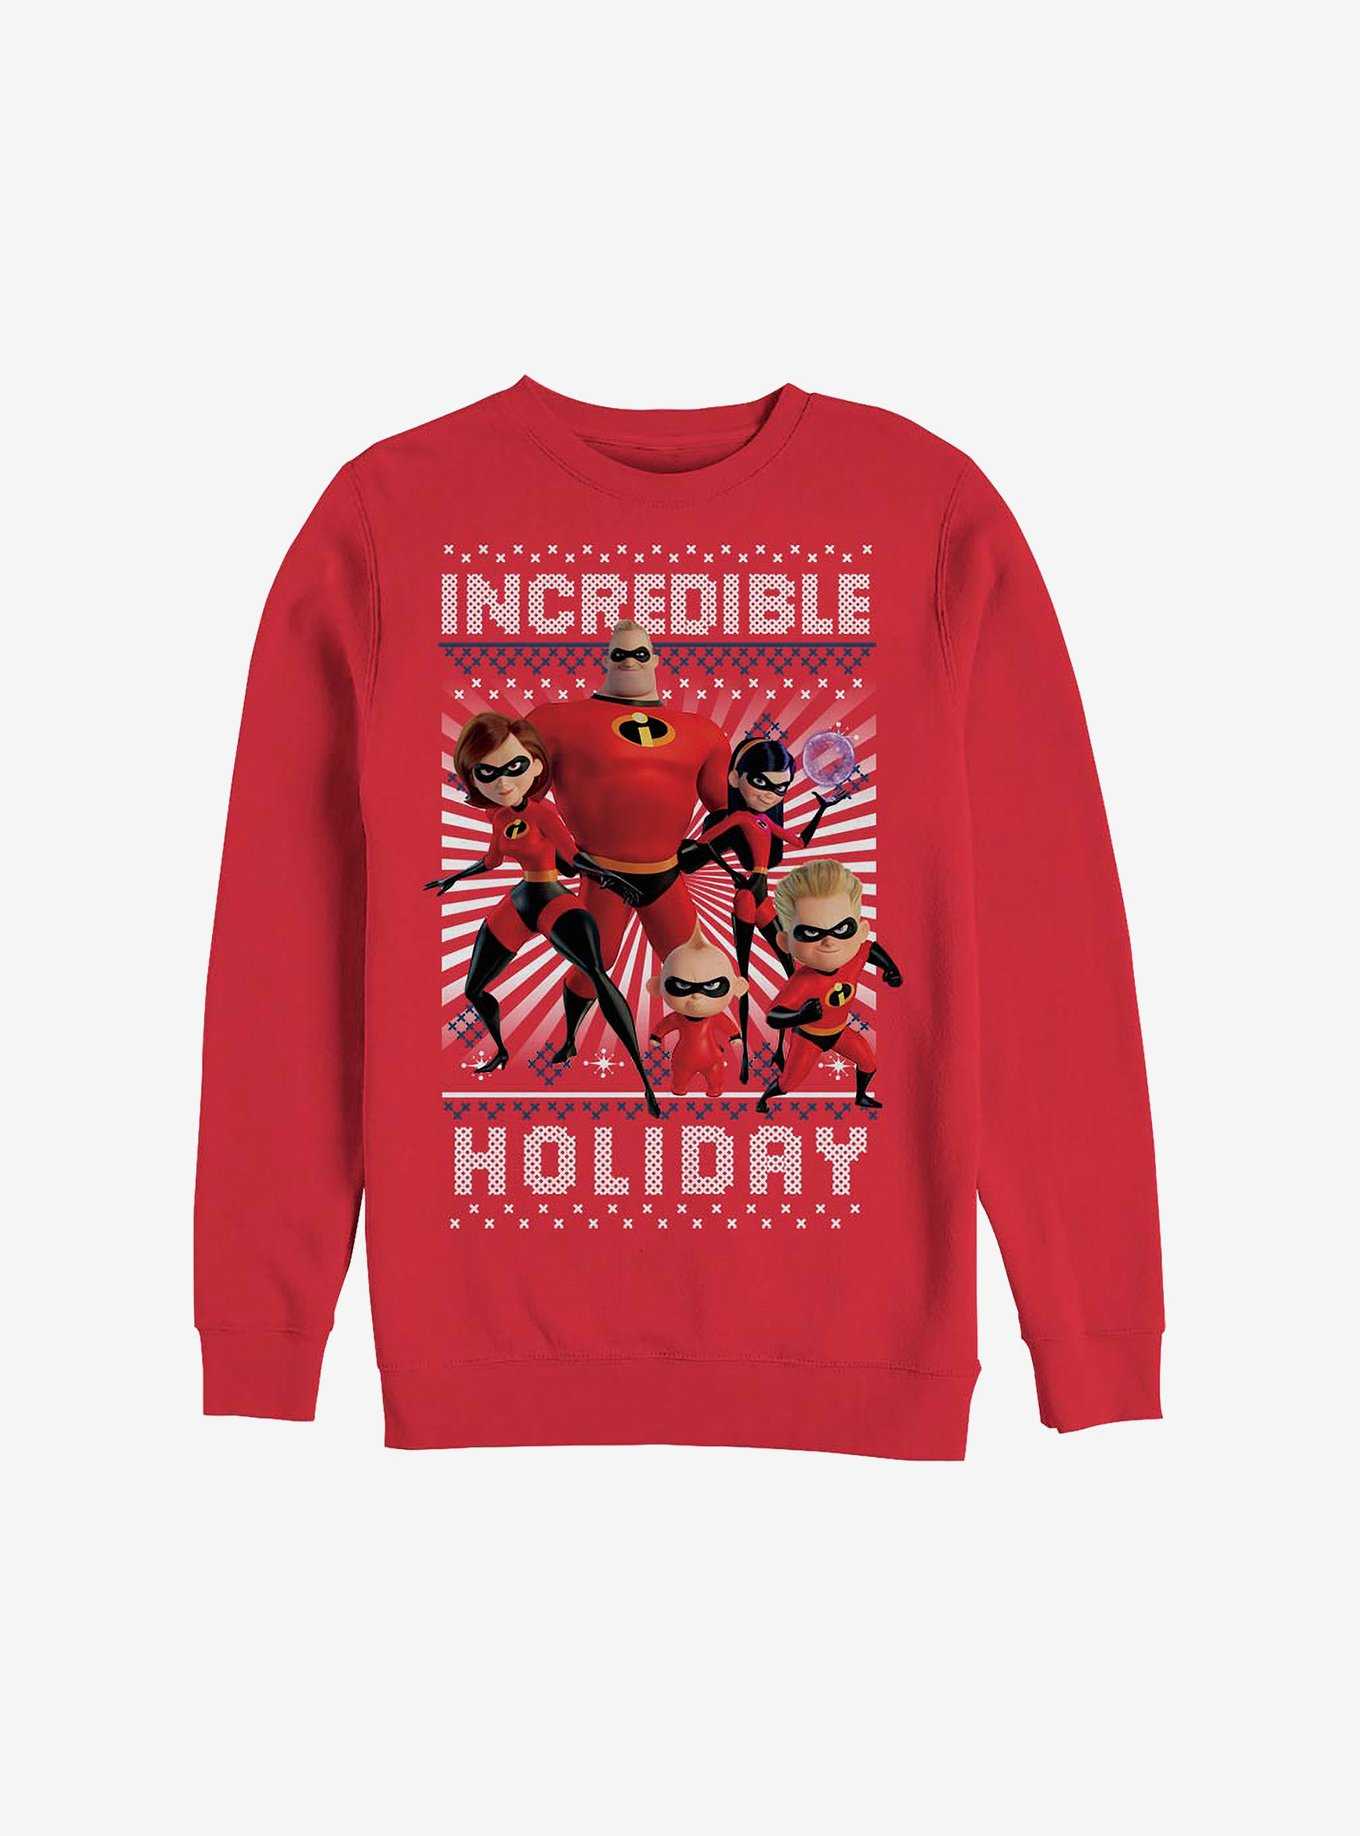 Disney Pixar The Incredibles Incredible Holiday Ugly Christmas Sweater Sweatshirt, , hi-res